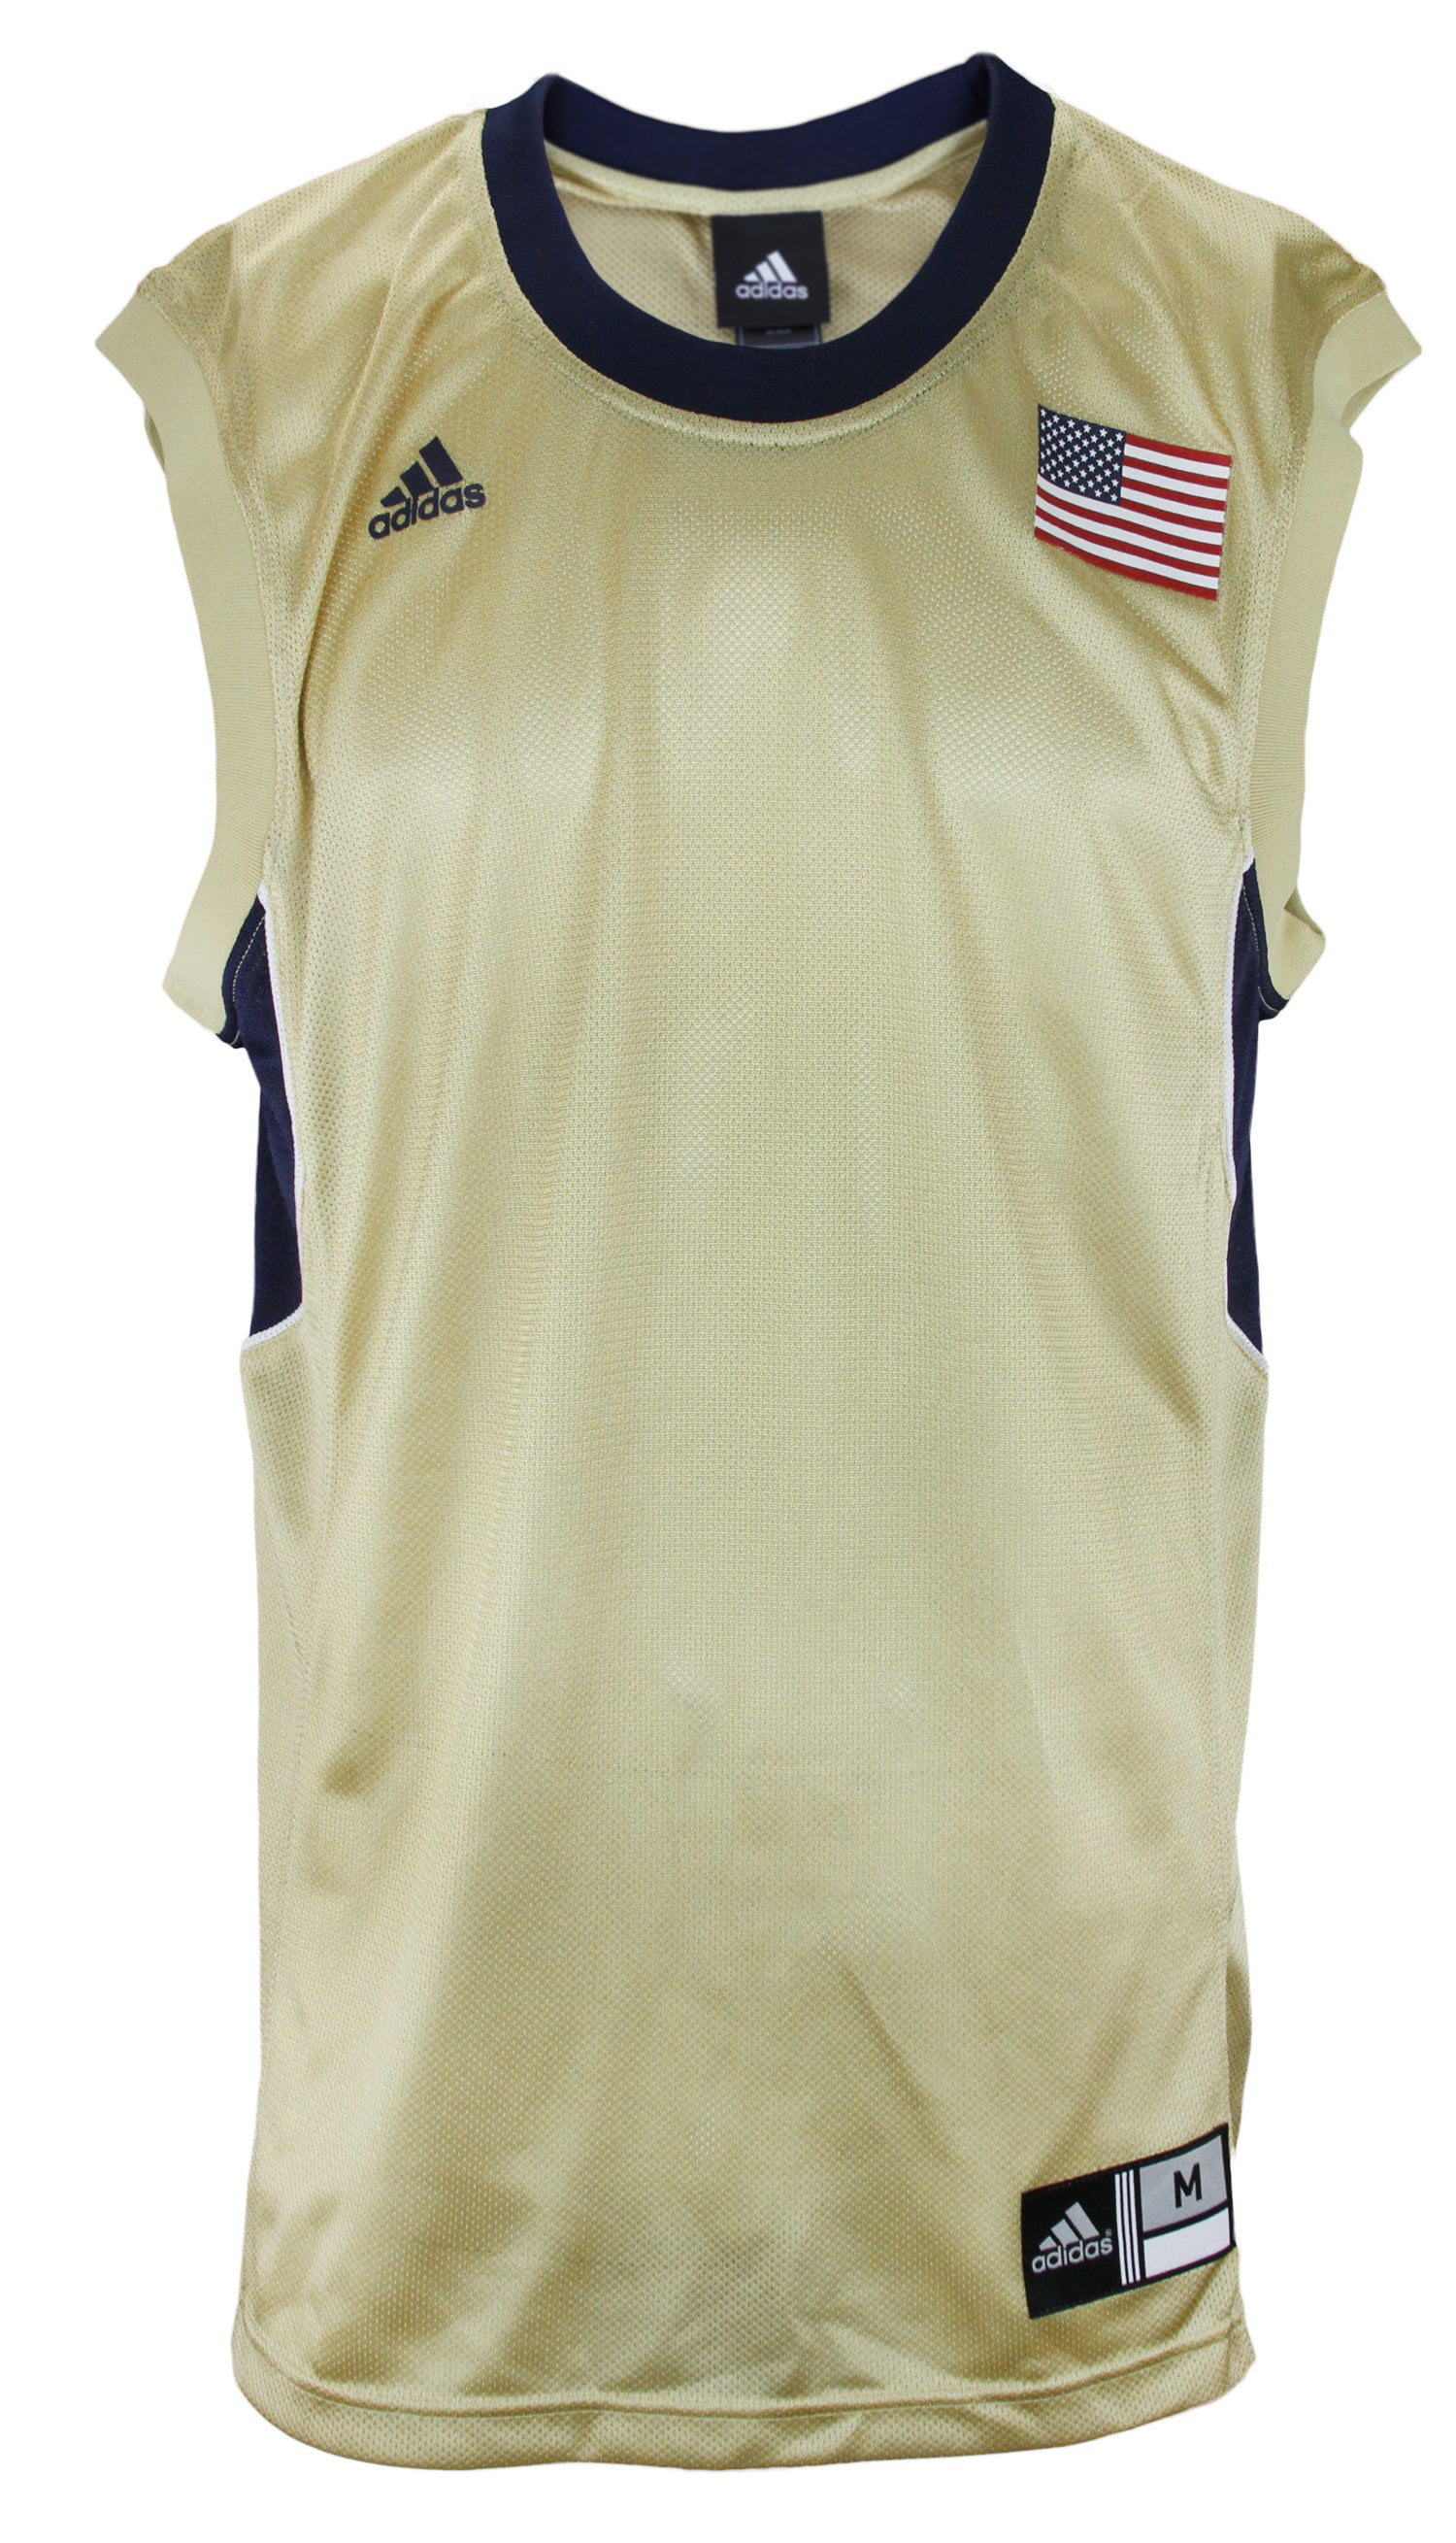 Adidas Men's Blank Basketball USA Flag Sleeveless Jersey, Gold - Walmart.com